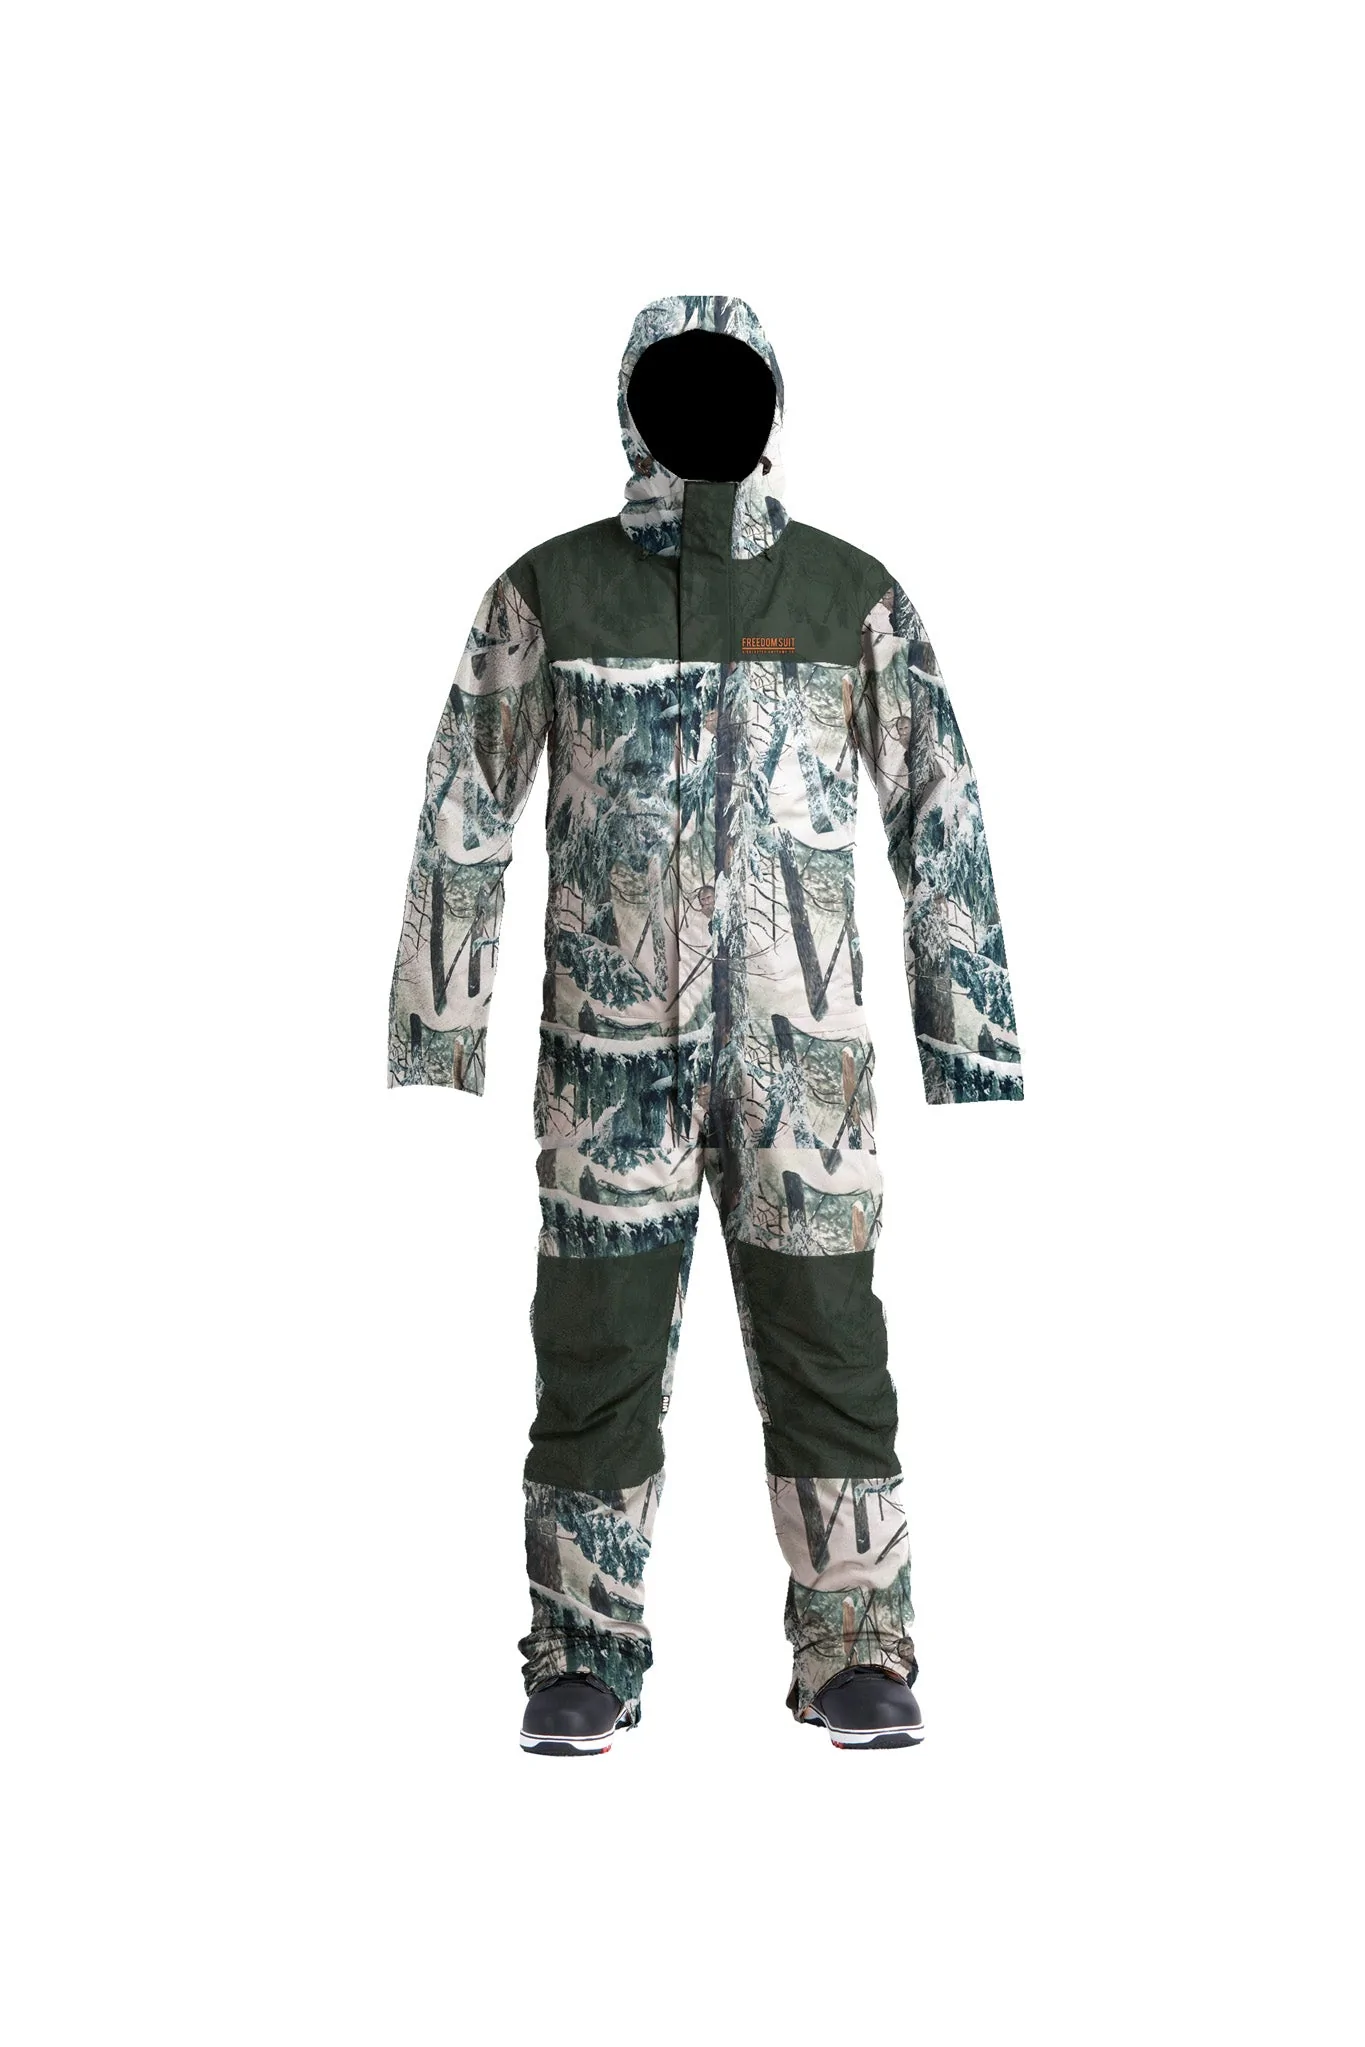 Airblaster insulated Freedom Suit onepiece yetiflage